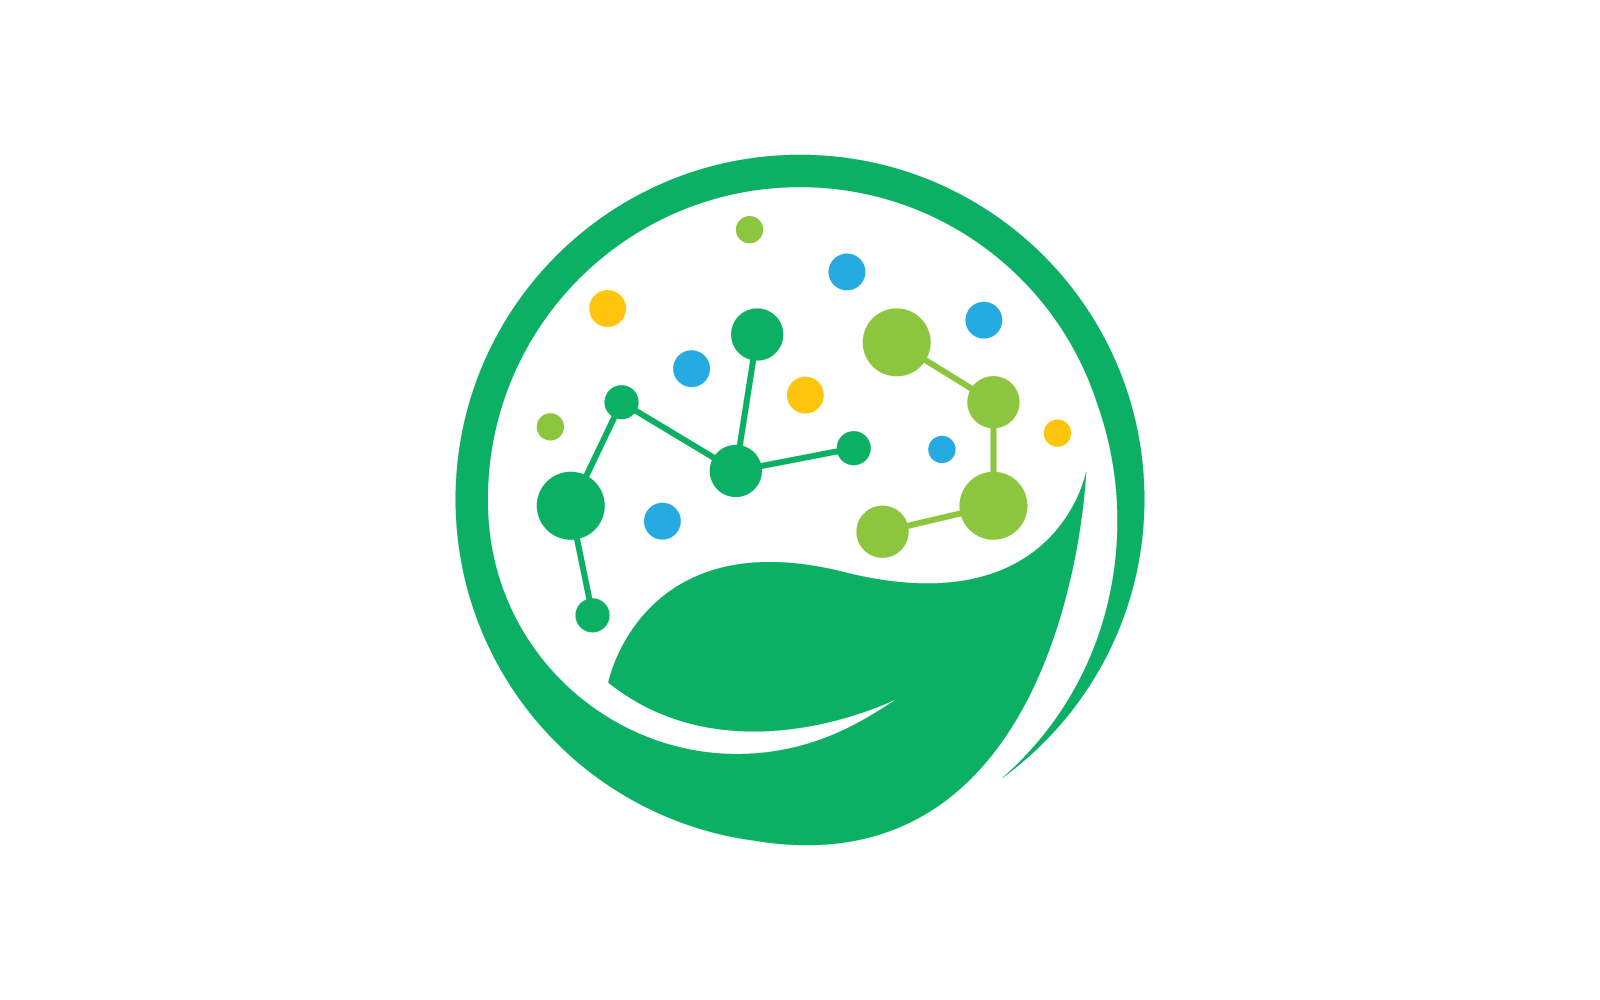 Bio tech leaf and molecule logo design illustration vector Logo Template